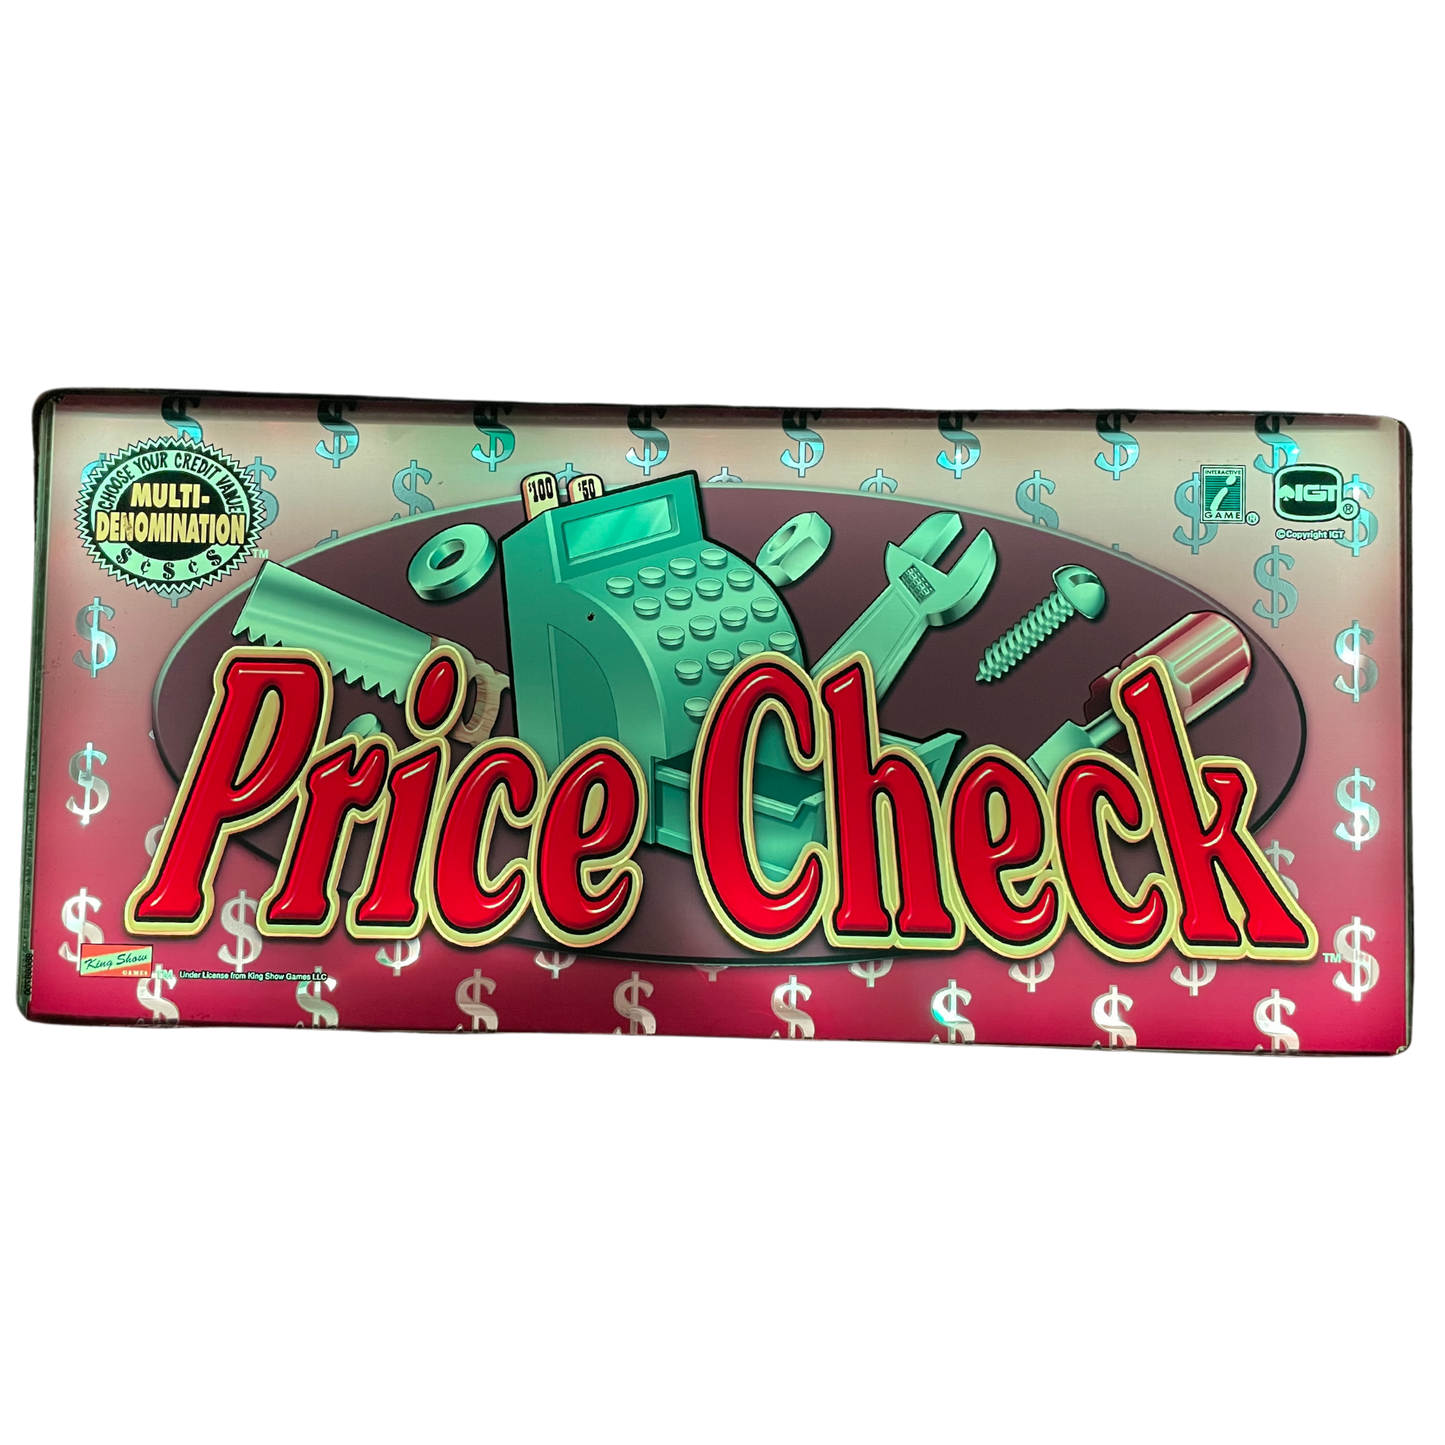 Price Check Slot Glass